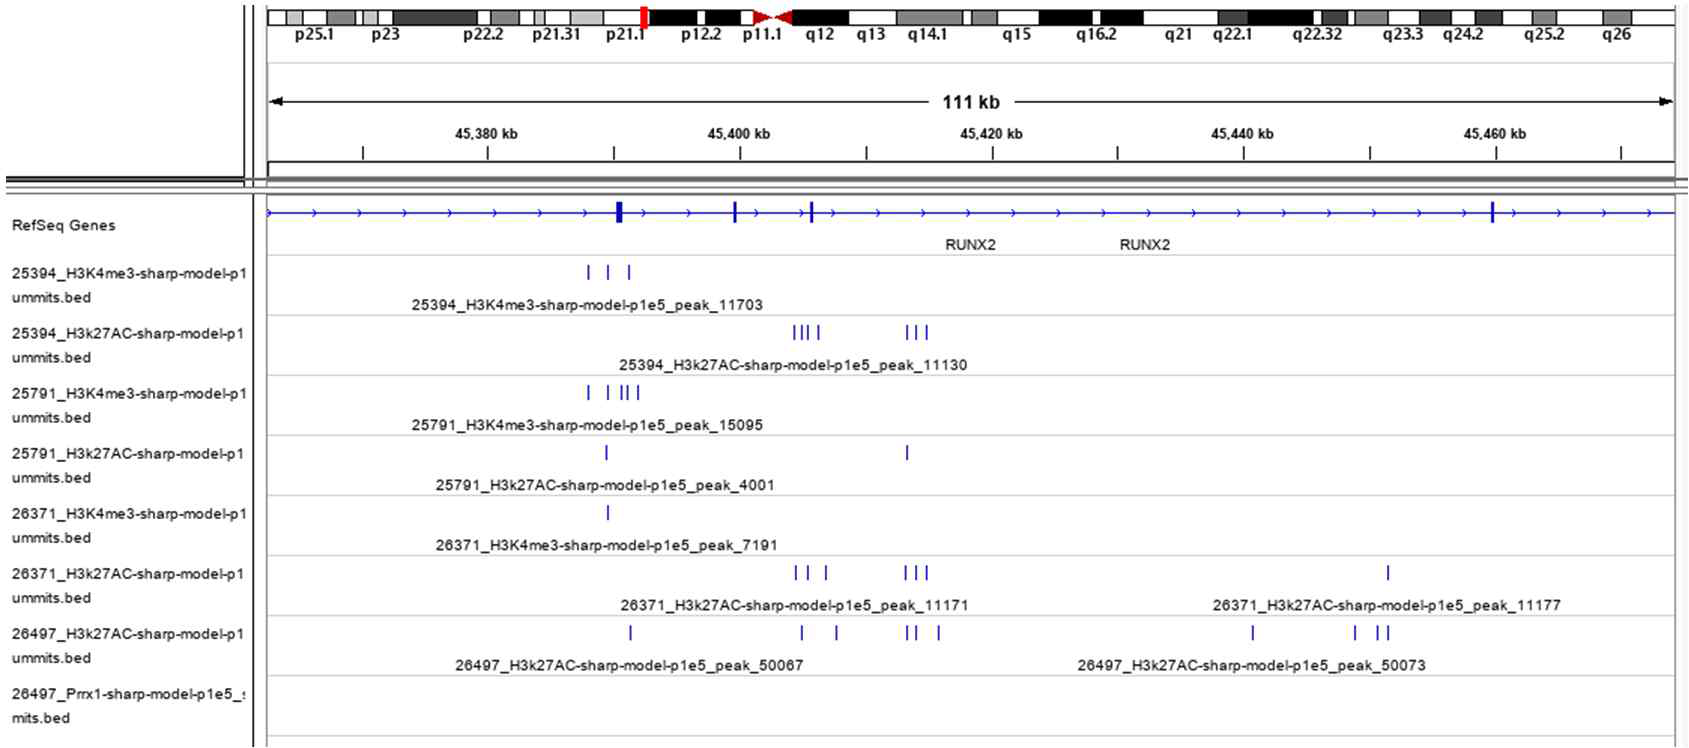 ChIP-peak mapping를 통한 super-enhancer의 존재 확인. 다양한 colon cancer CAF에서 후보 master transcription factor인 Runx2의 조절부위에 super-enhancer가 존재함을 확인할 수 있음